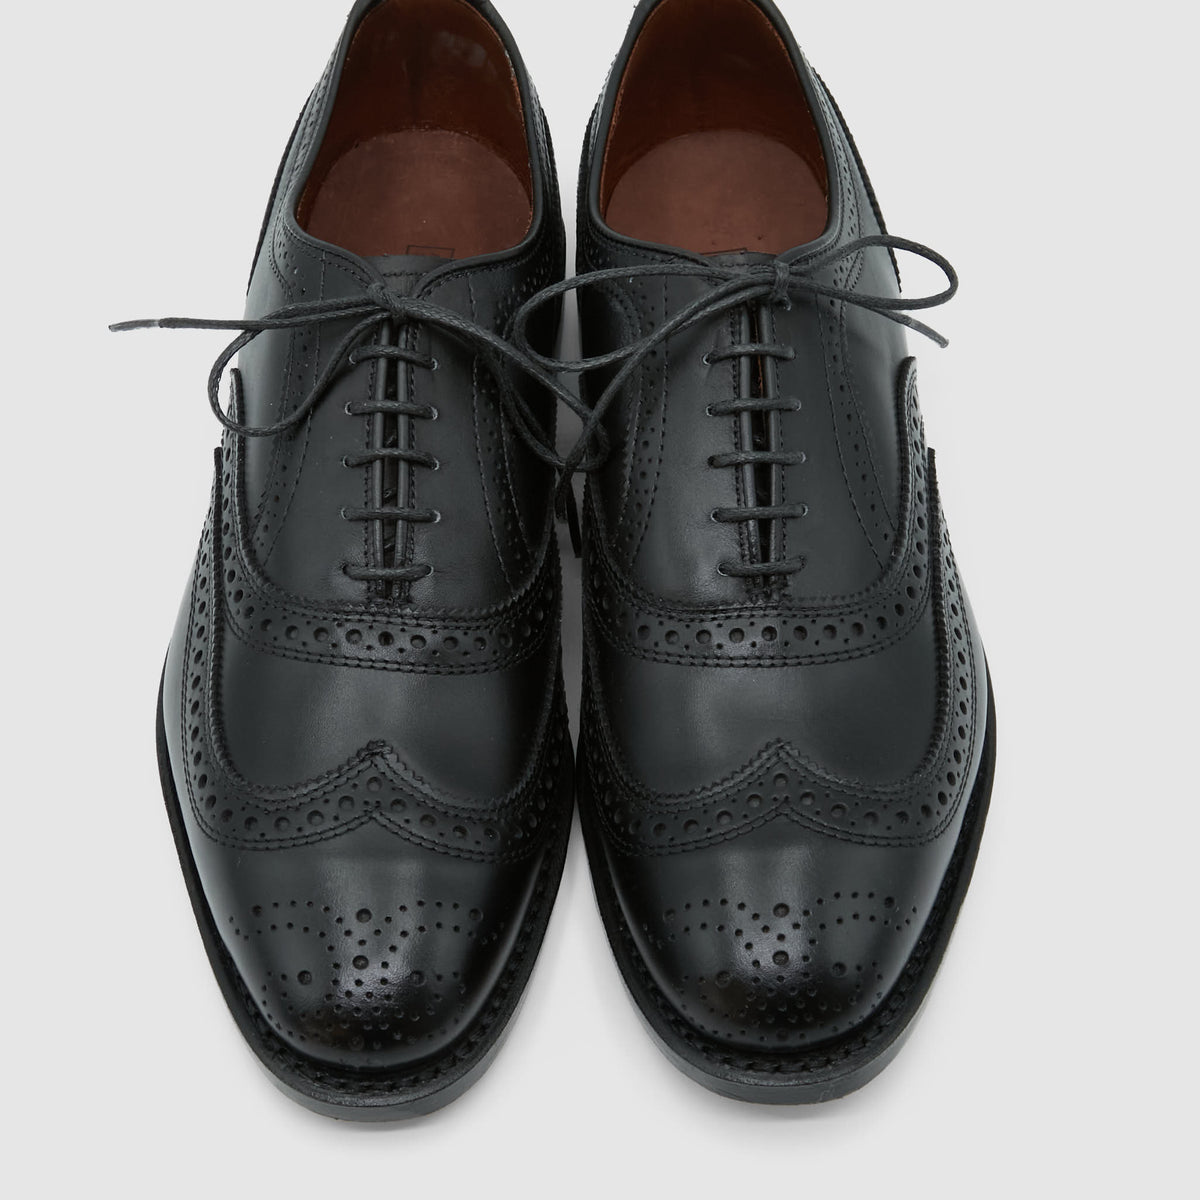 Allen-Edmonds McAllister Wingtip Oxford Shoe